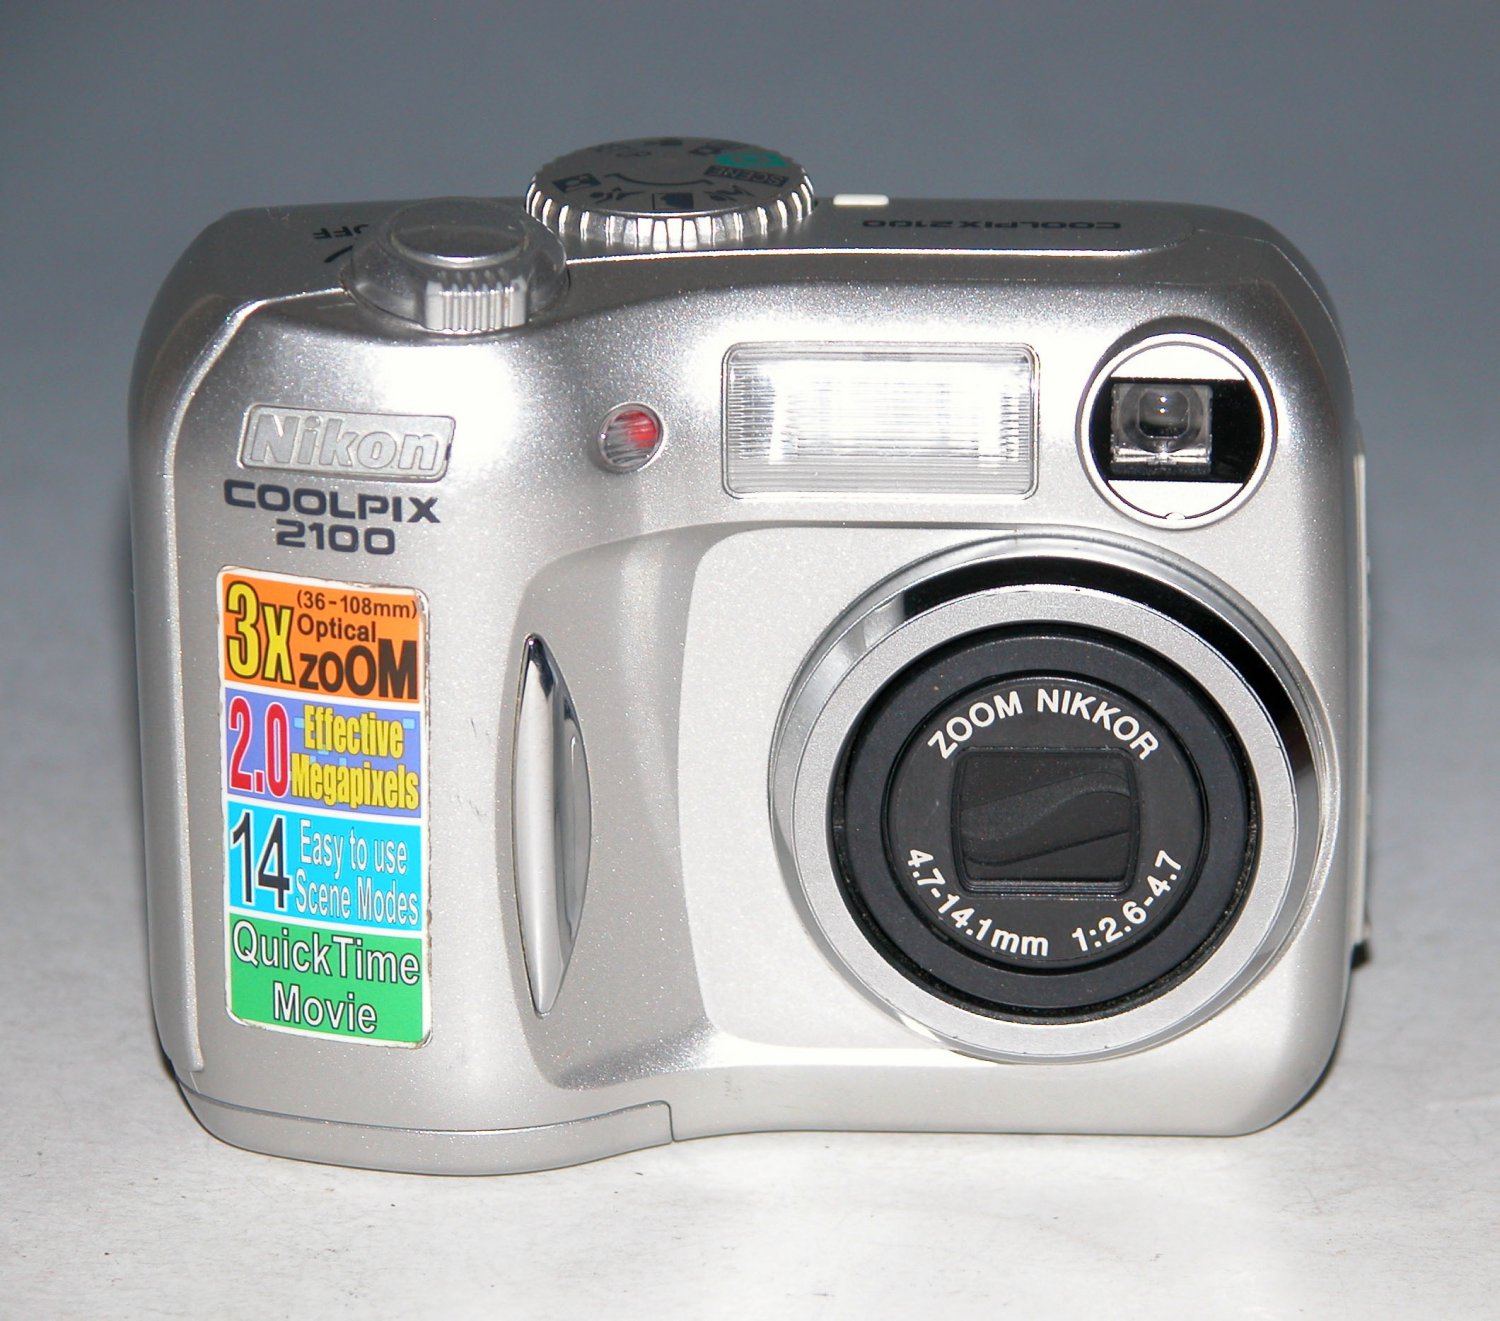 Nikon COOLPIX 2100 2MP Digital Camera - Silver #1343